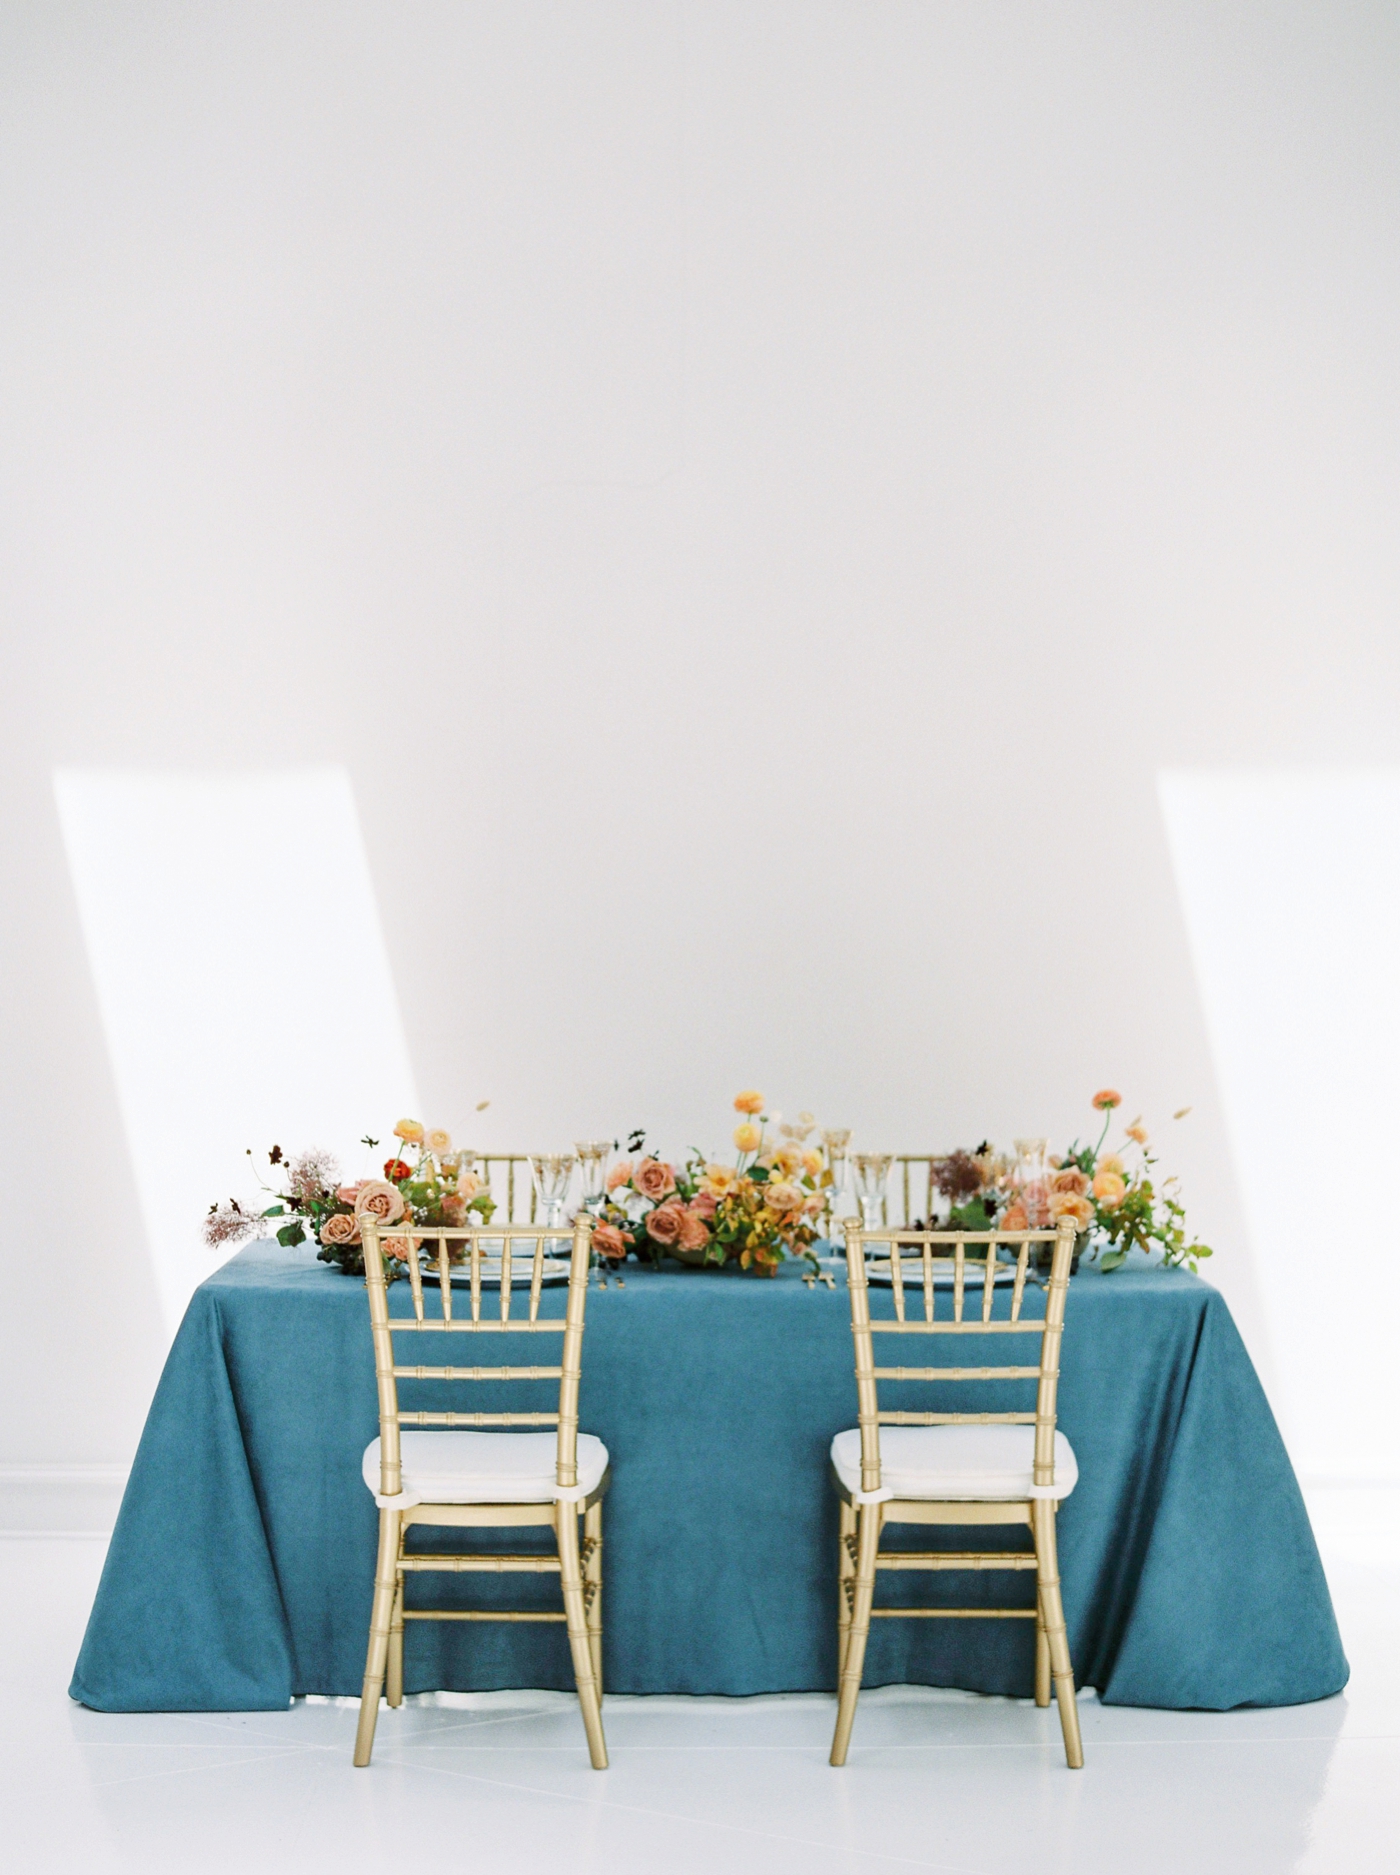 Dallas wedding photographers | wedding photography 1 on 1 workshop | fall wedding inspiration table decor | Justine milton film photographer